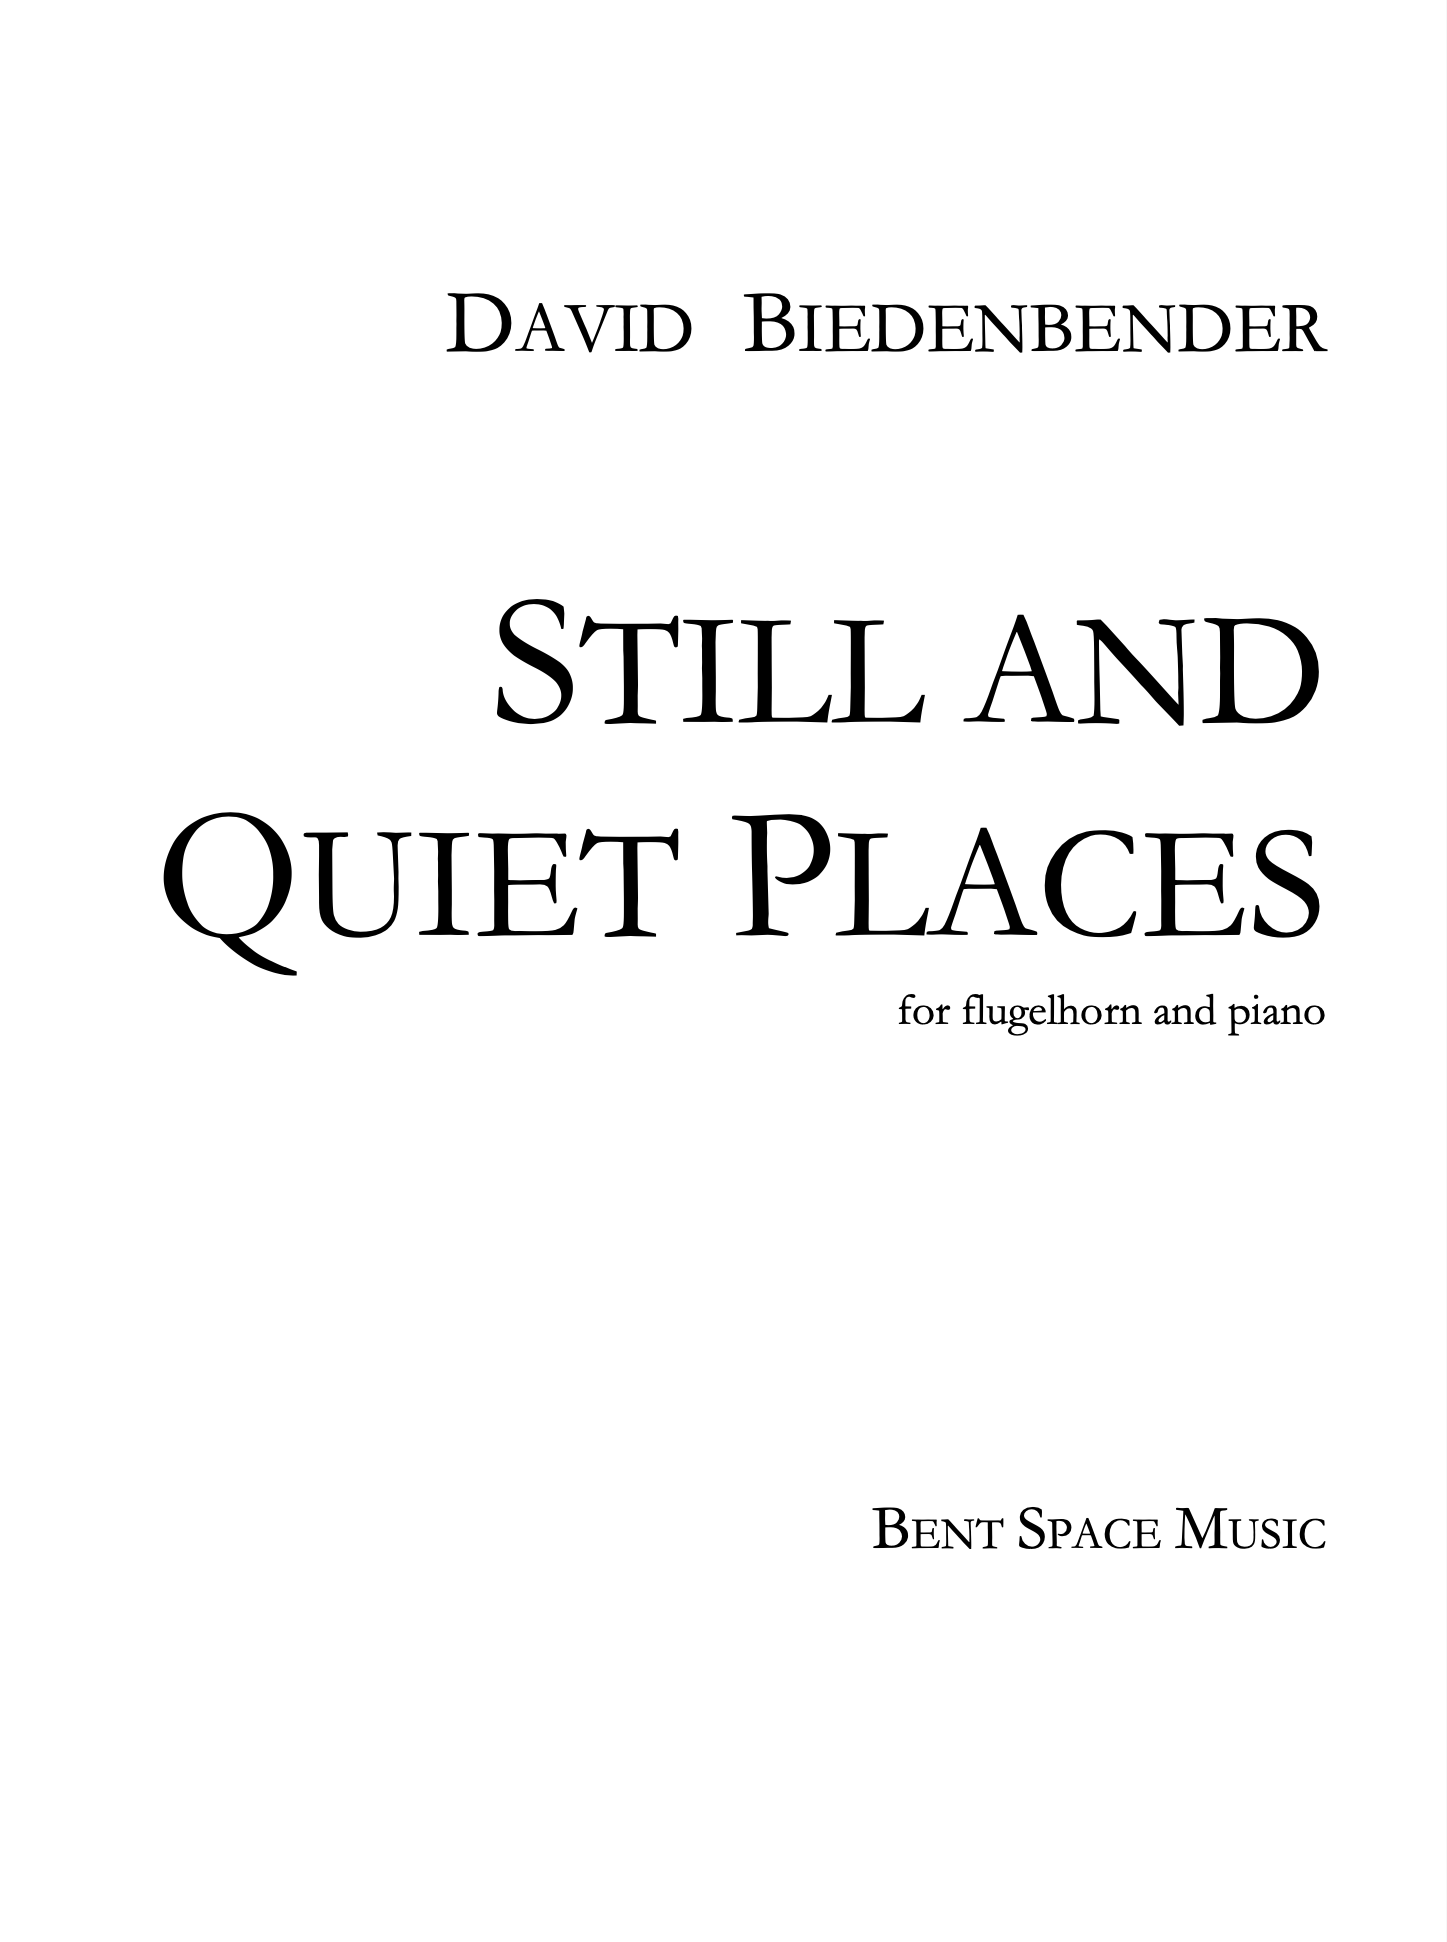 Still And Quiet Places by David Biedenbender